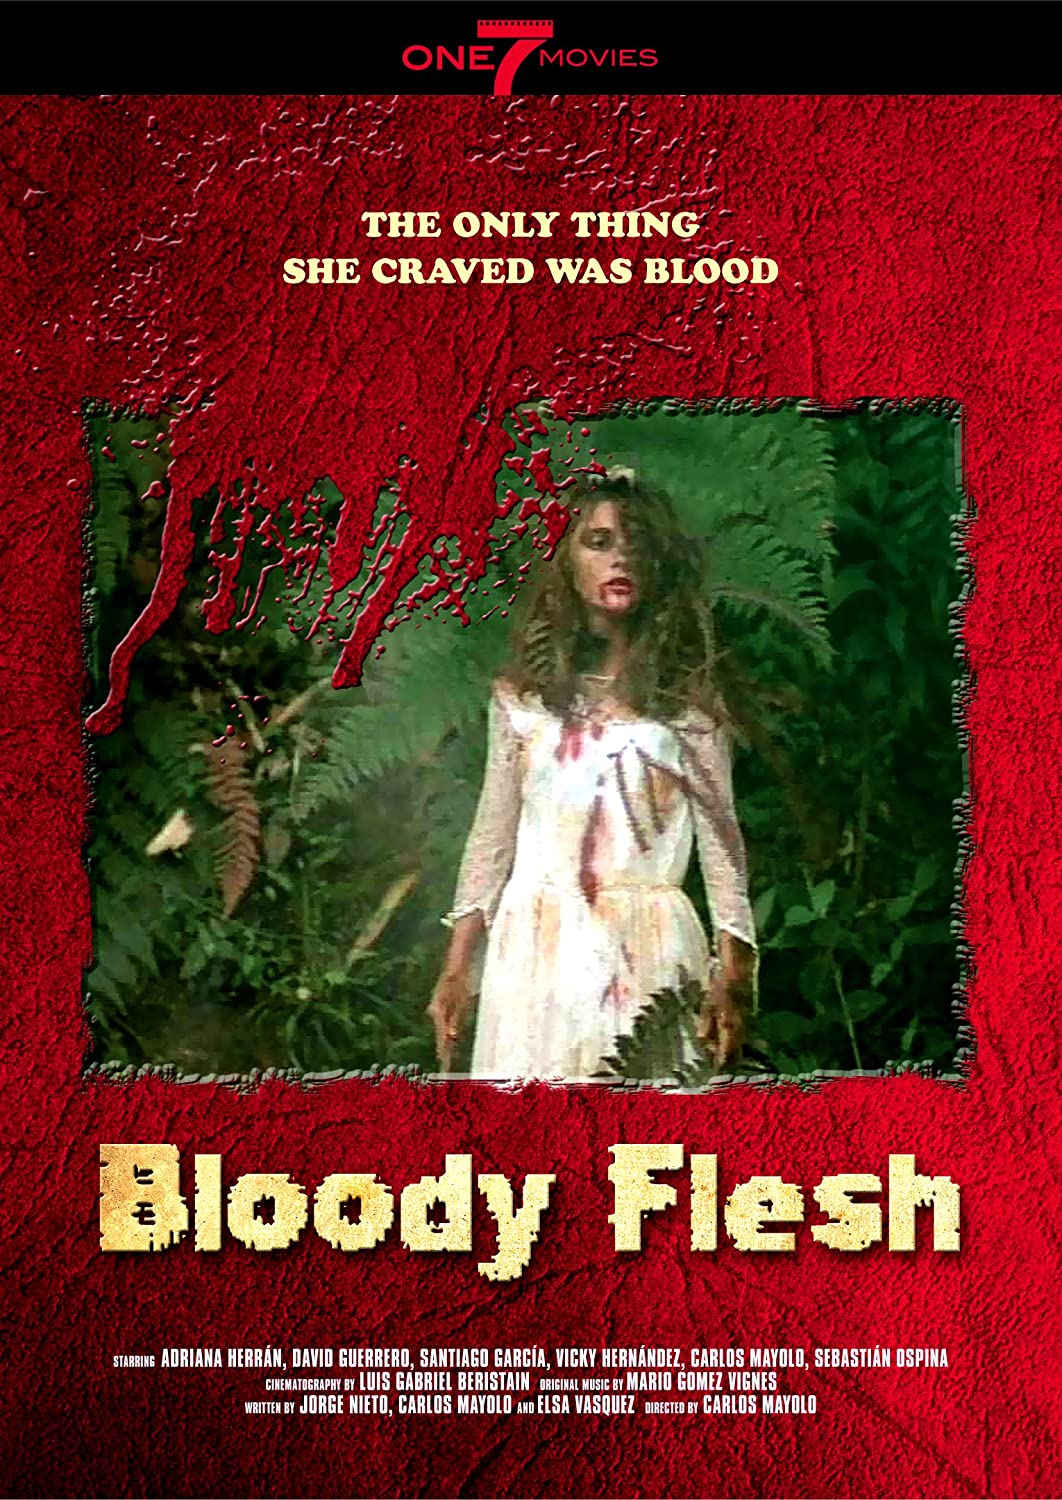 BLOODY FLESH DVD